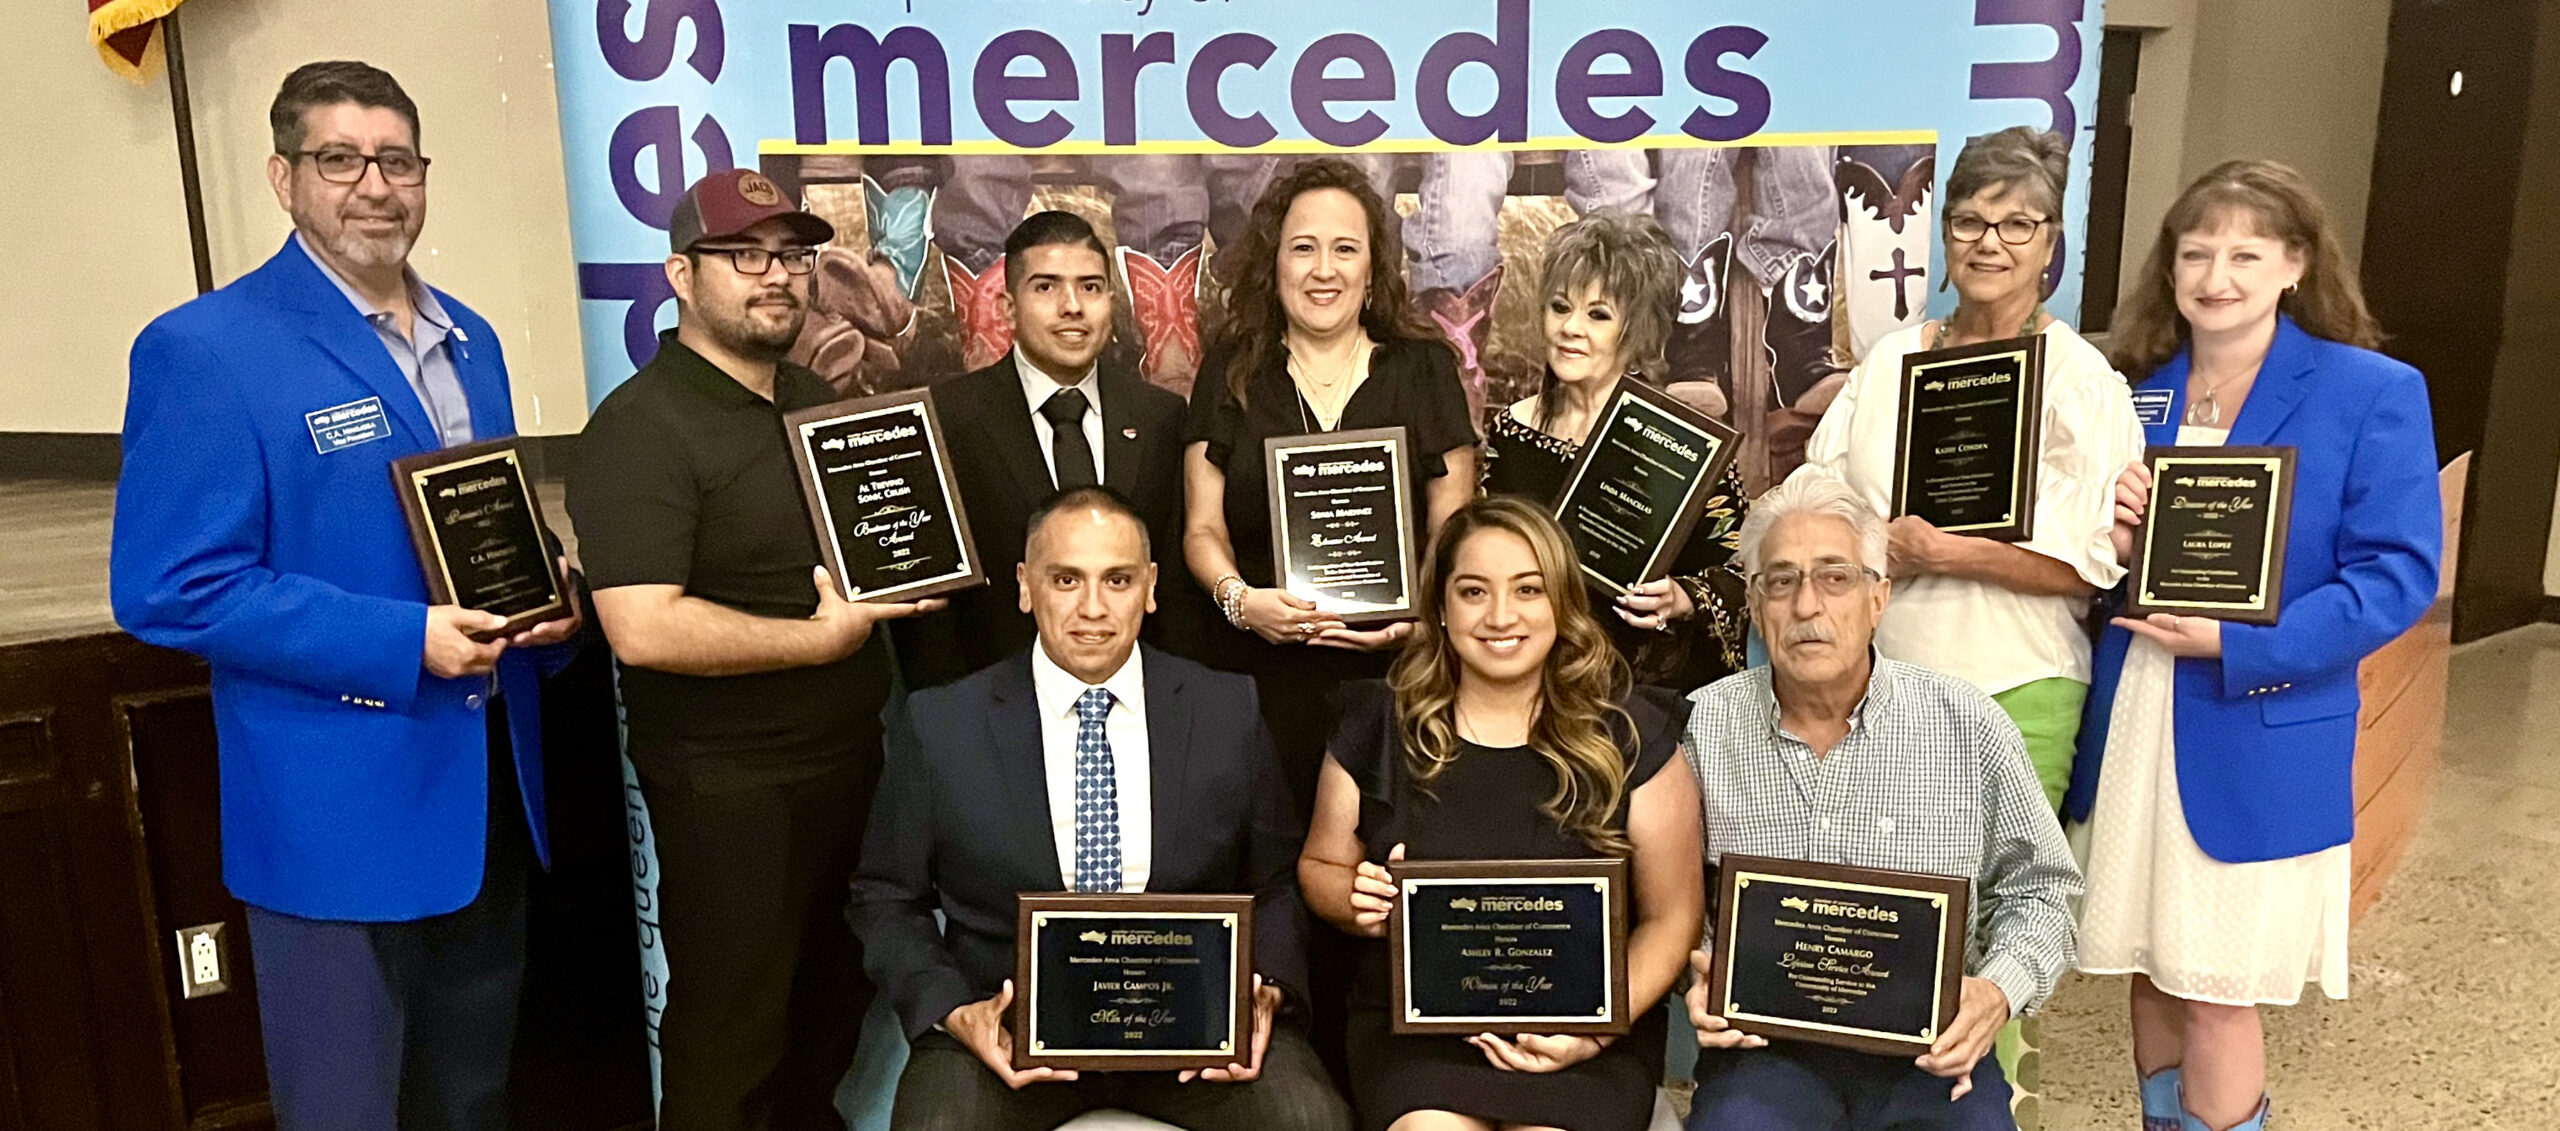 Mercedes Chamber Annual Awards Banquet Winners